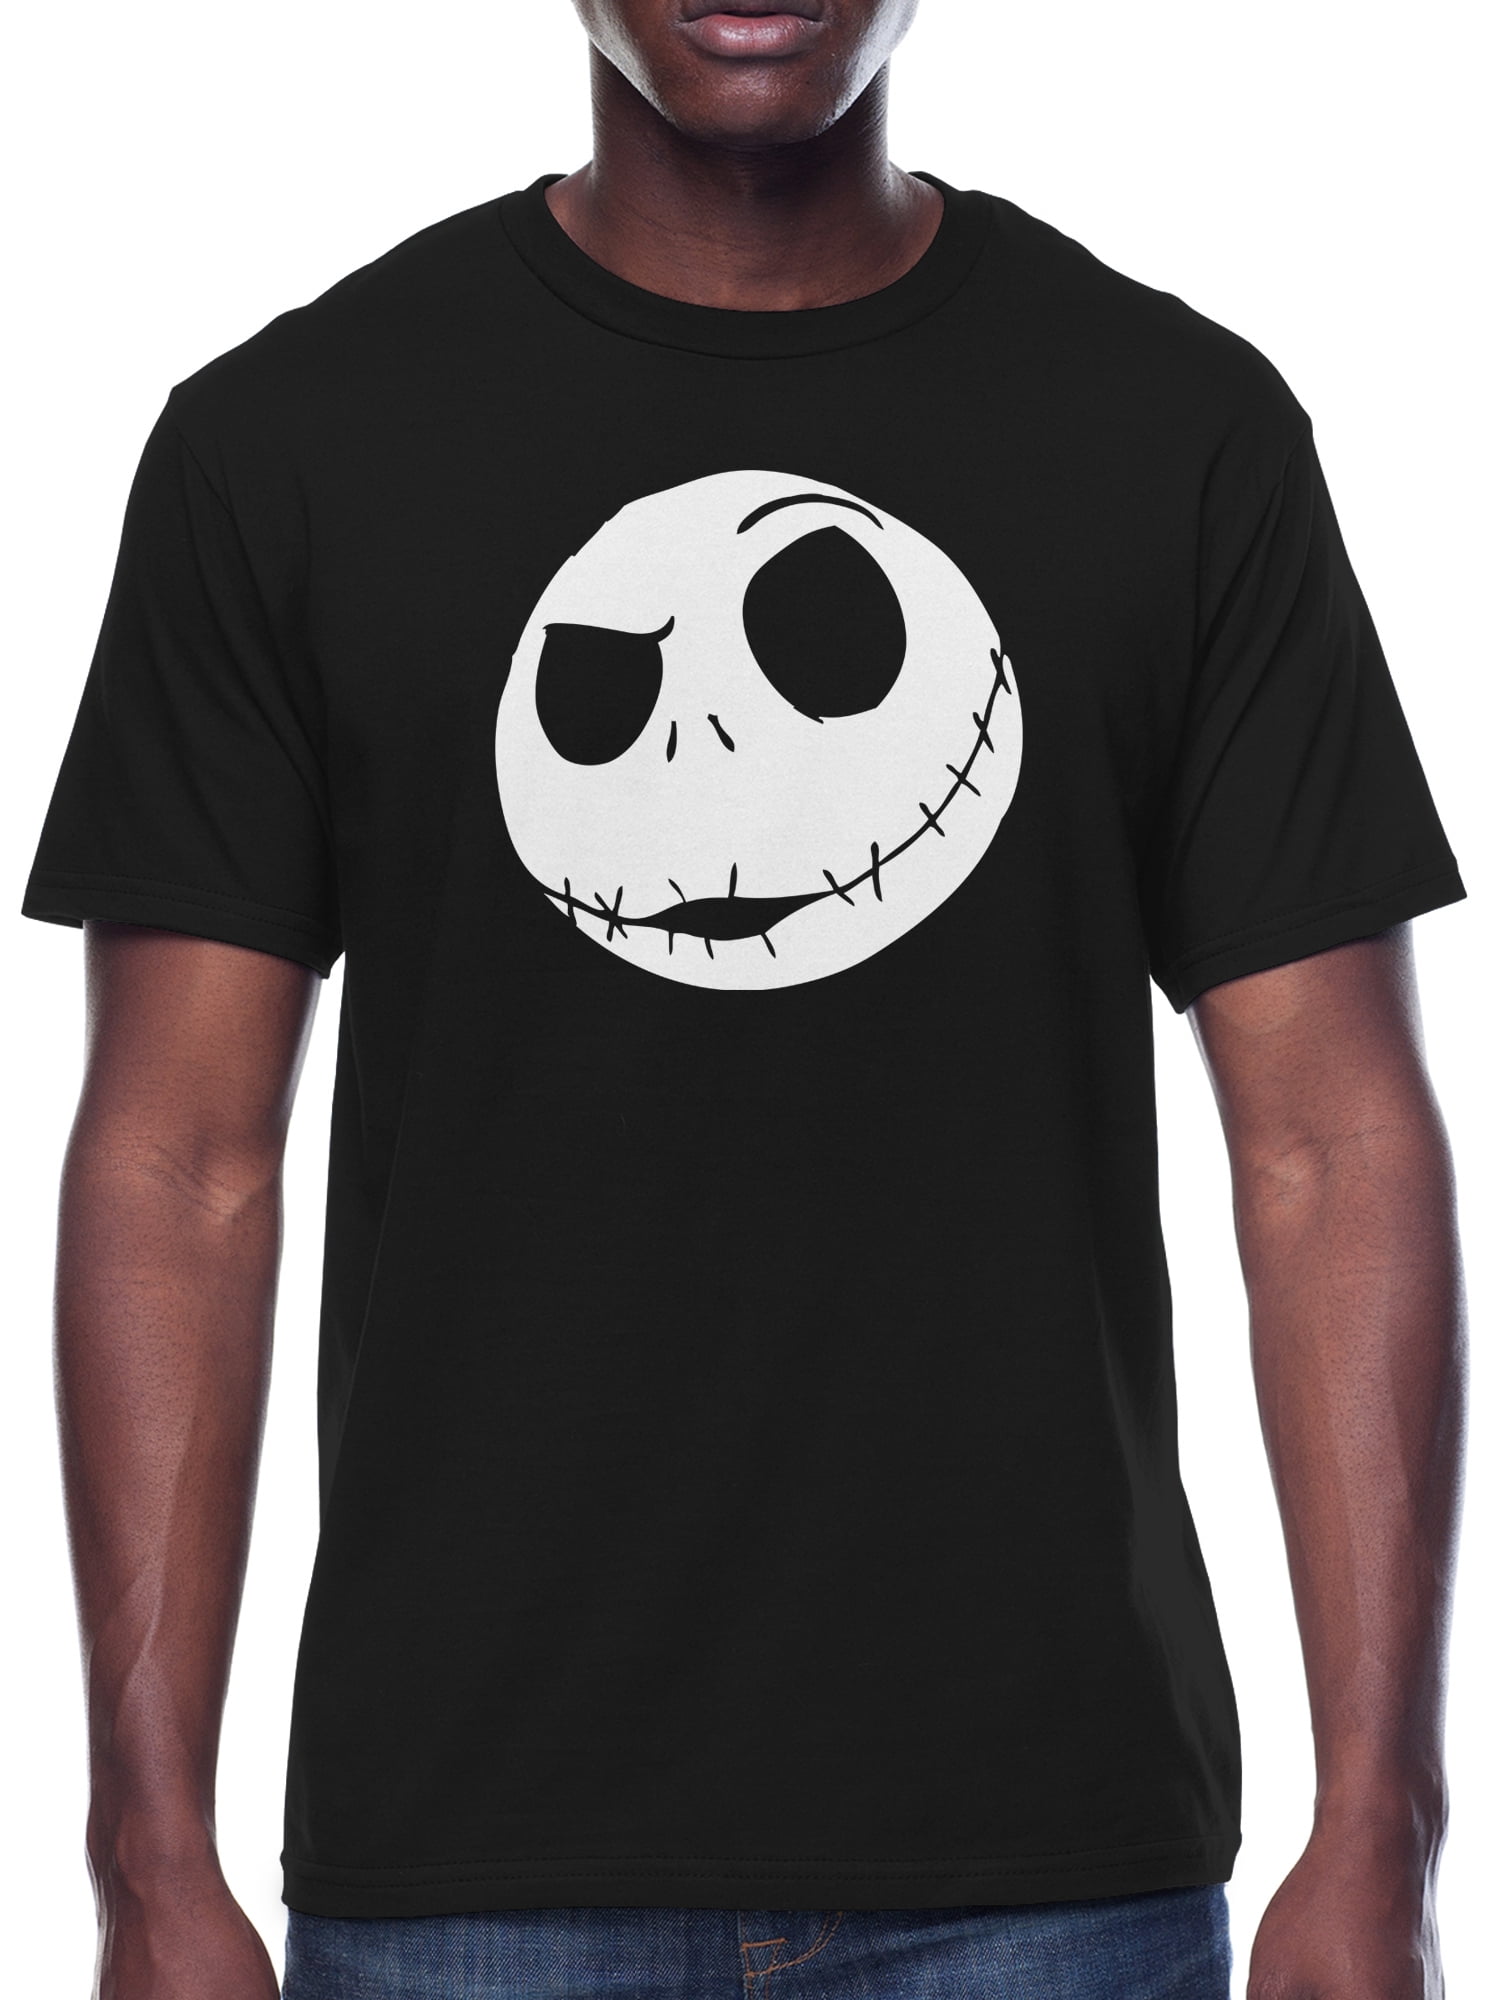 Jack Skellington Style Heavy Metal Halloween Nightmare Before Christmas T Shirt